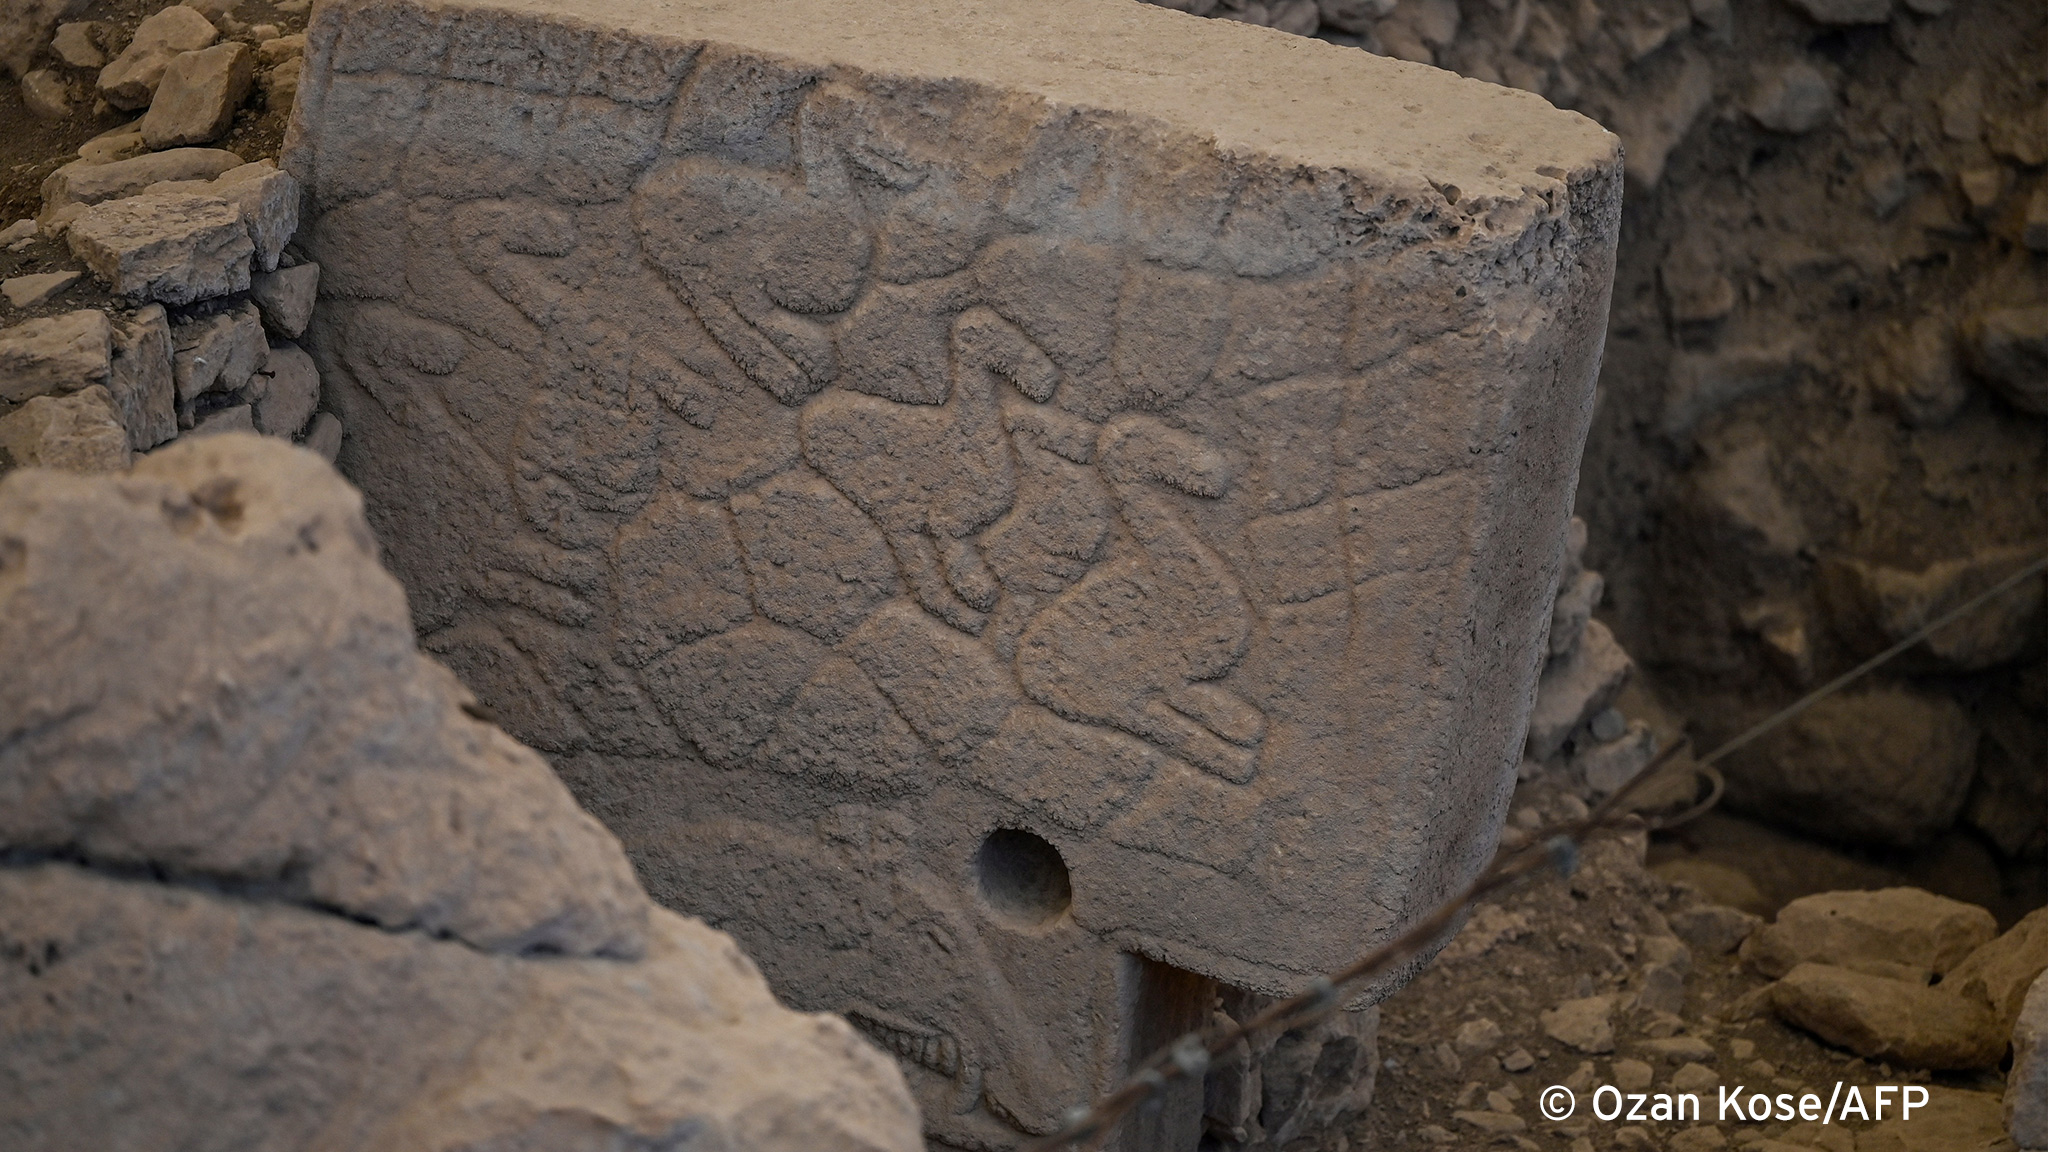  Carvings of ducks on one of the pillars at the prehistoric Gobekli Tepe site in Sanliurfa, Turkey (photo: Ozan KOSE/AFP) 